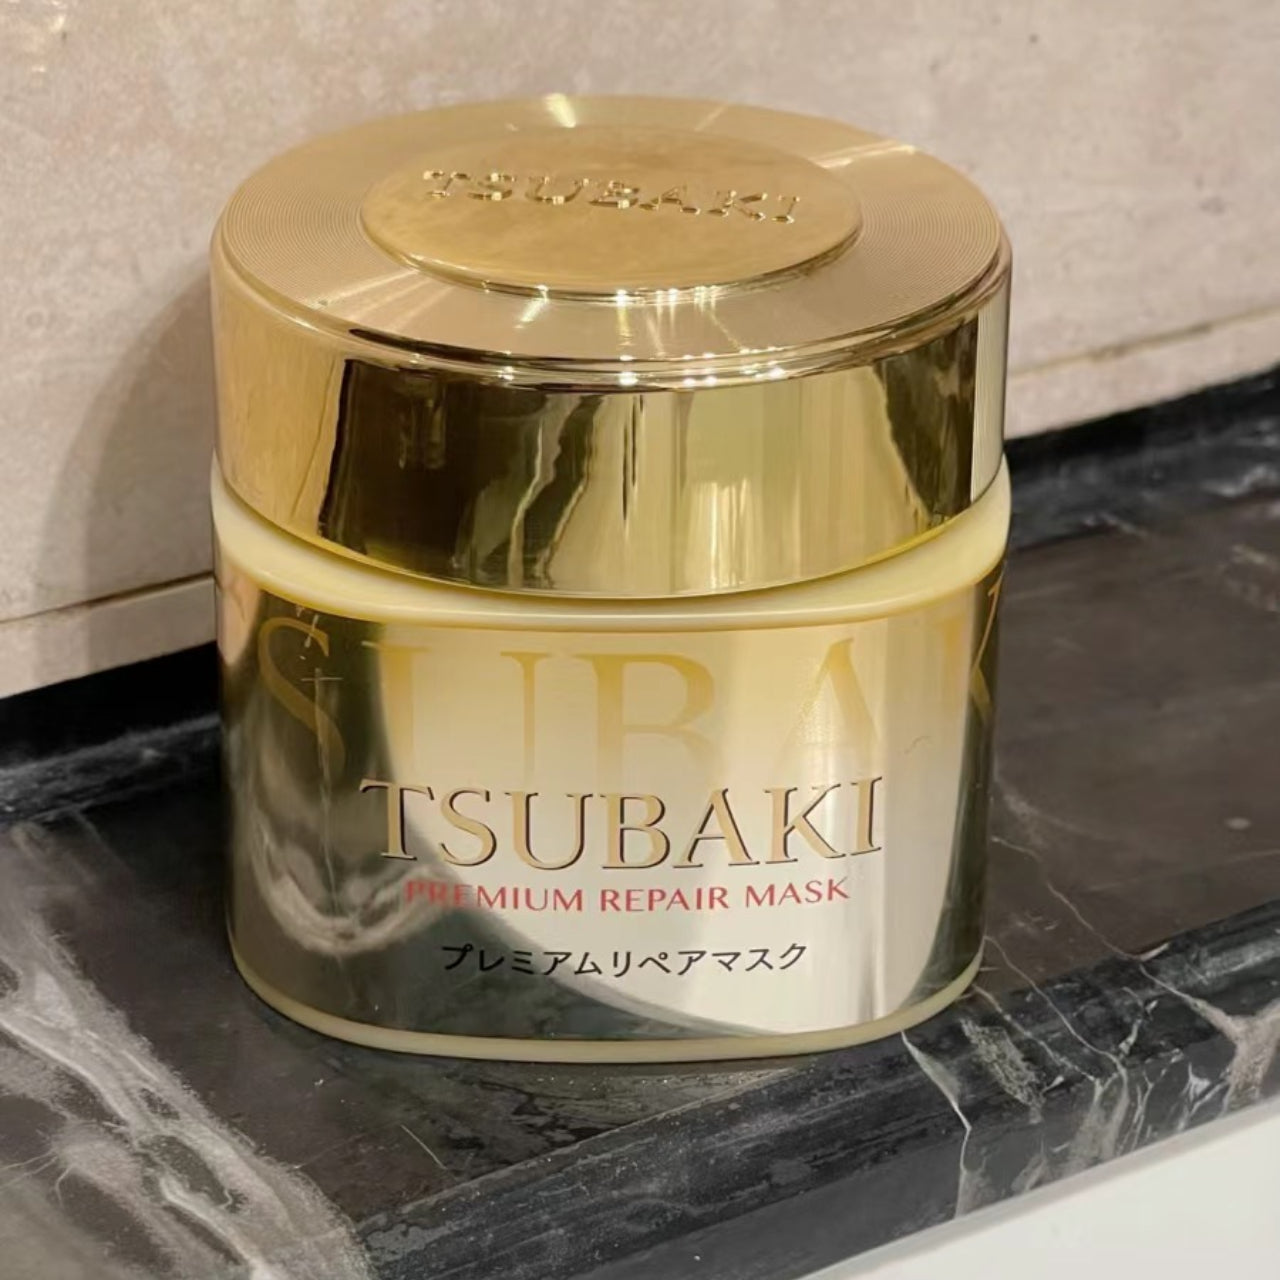 SHISEIDO TSUBAKI Premium Repair Hair Mask 180g